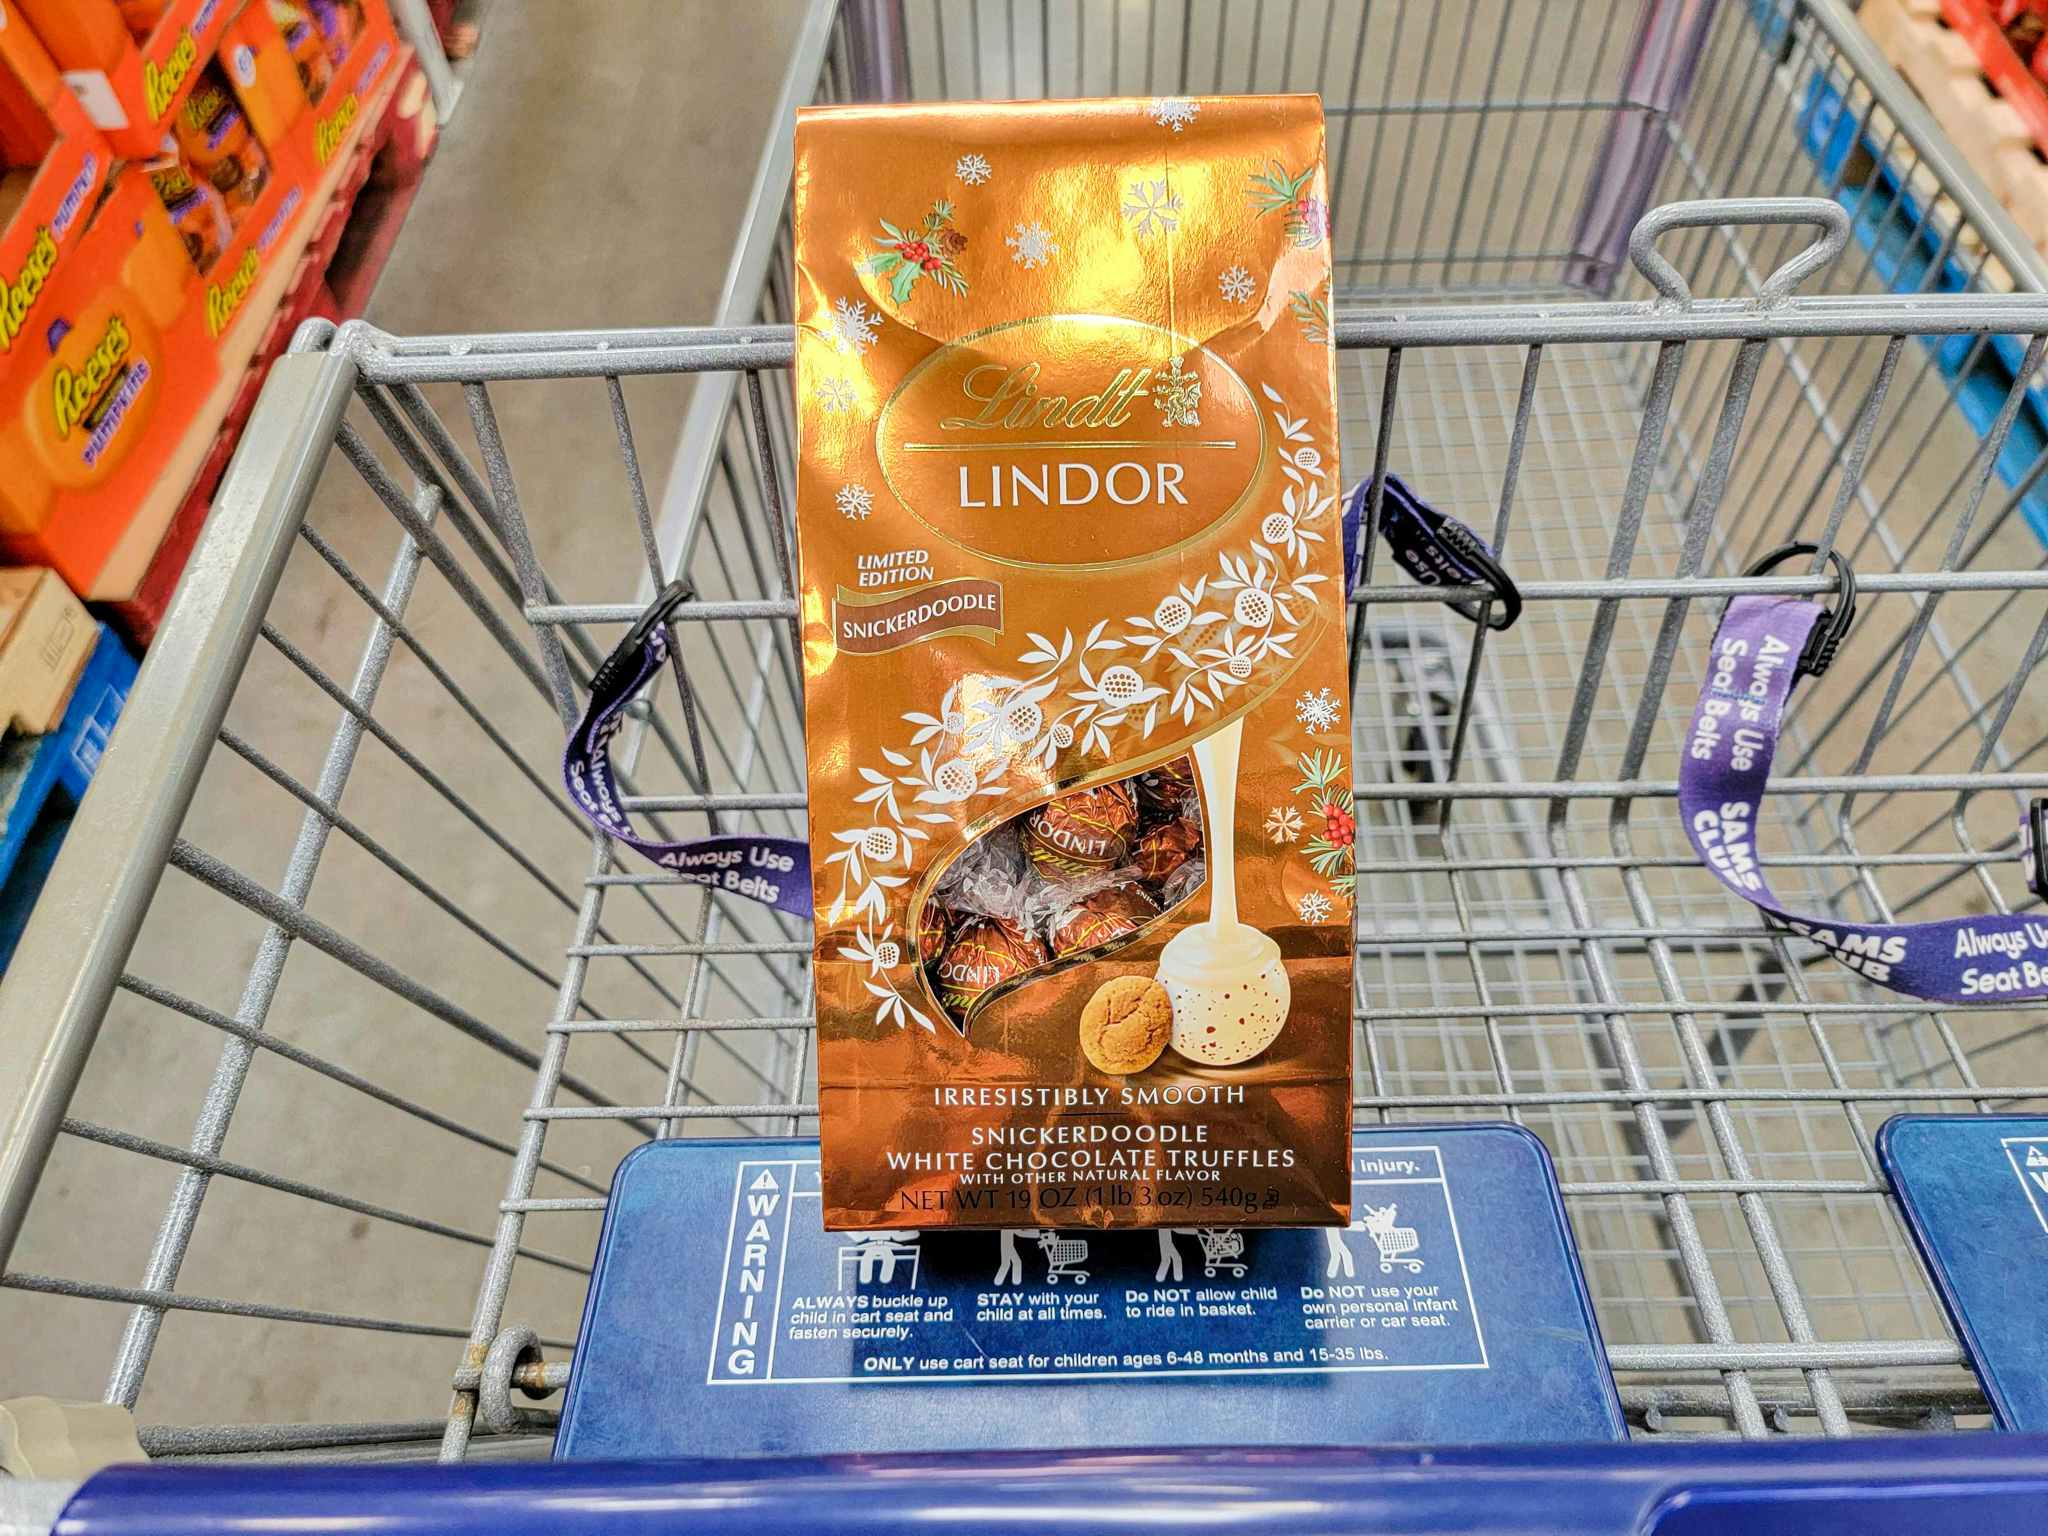 lindt truffles in snickerdoodle flavor in a cart